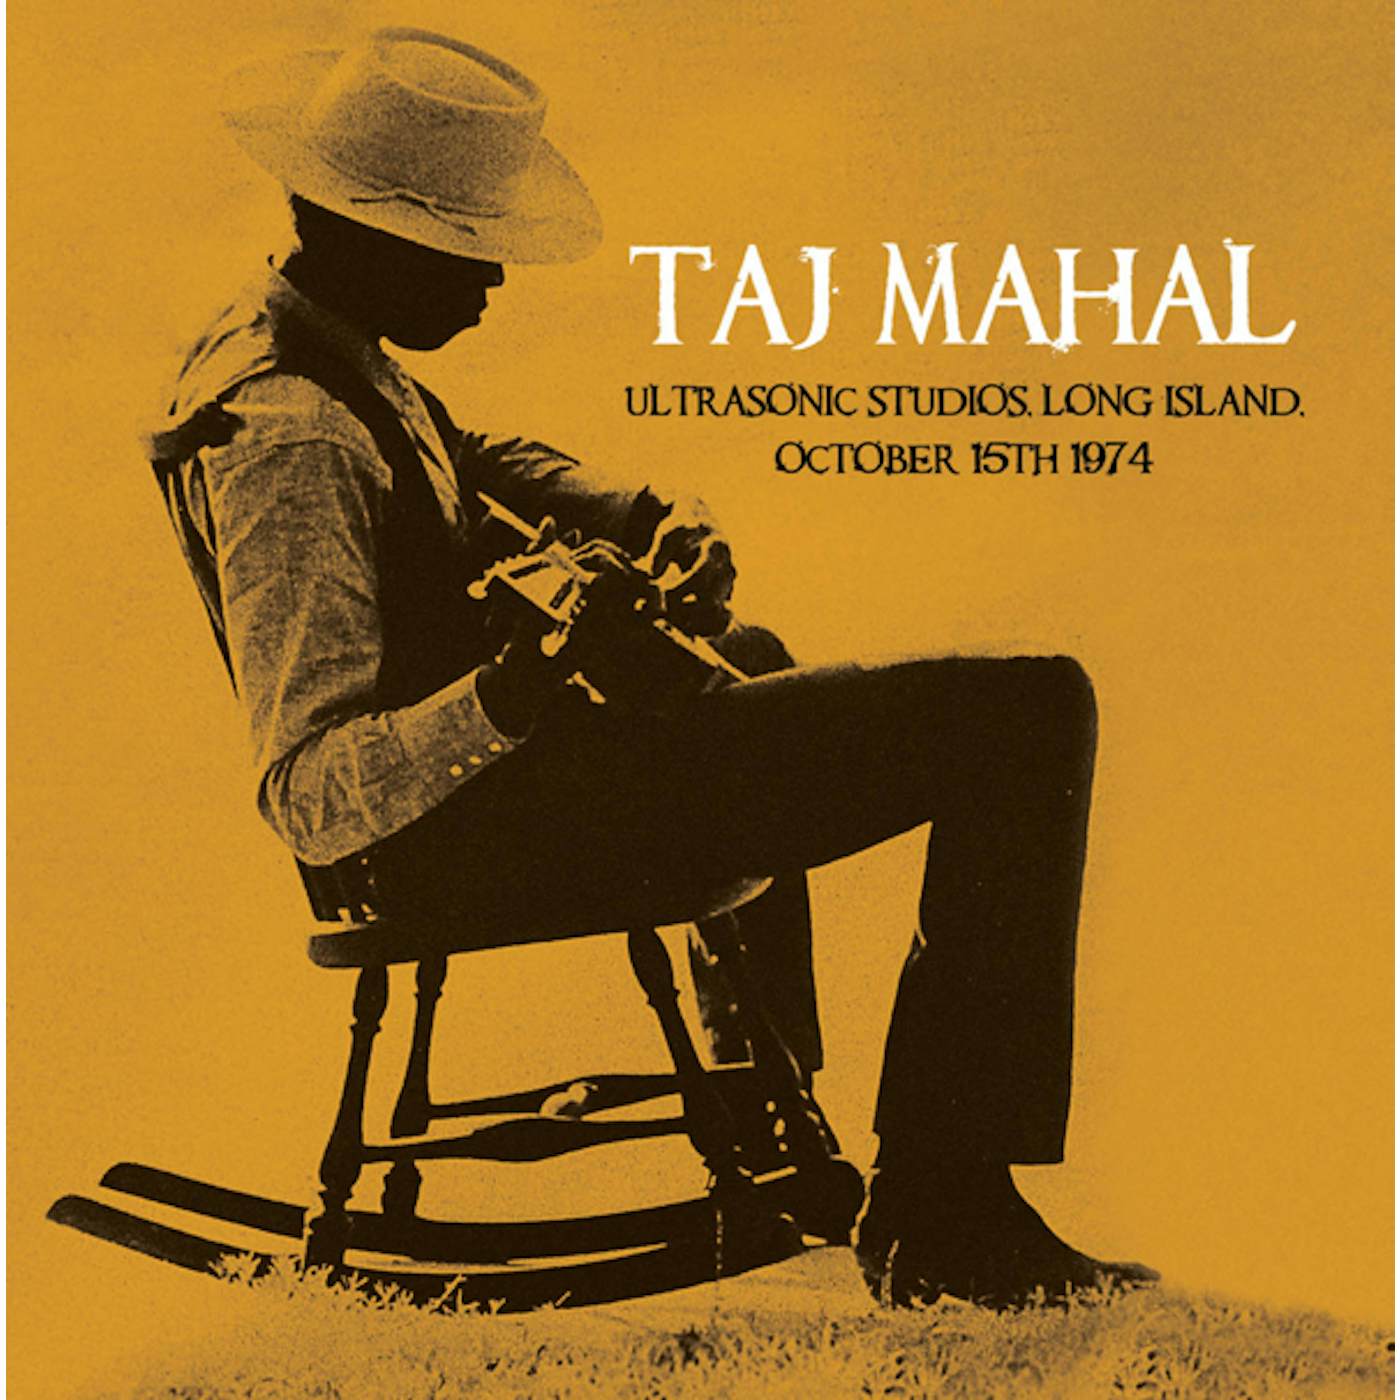 Taj Mahal ULTRASONIC STUDIOS LONG ISLAND OCTOBER 15TH 1974 Vinyl Record